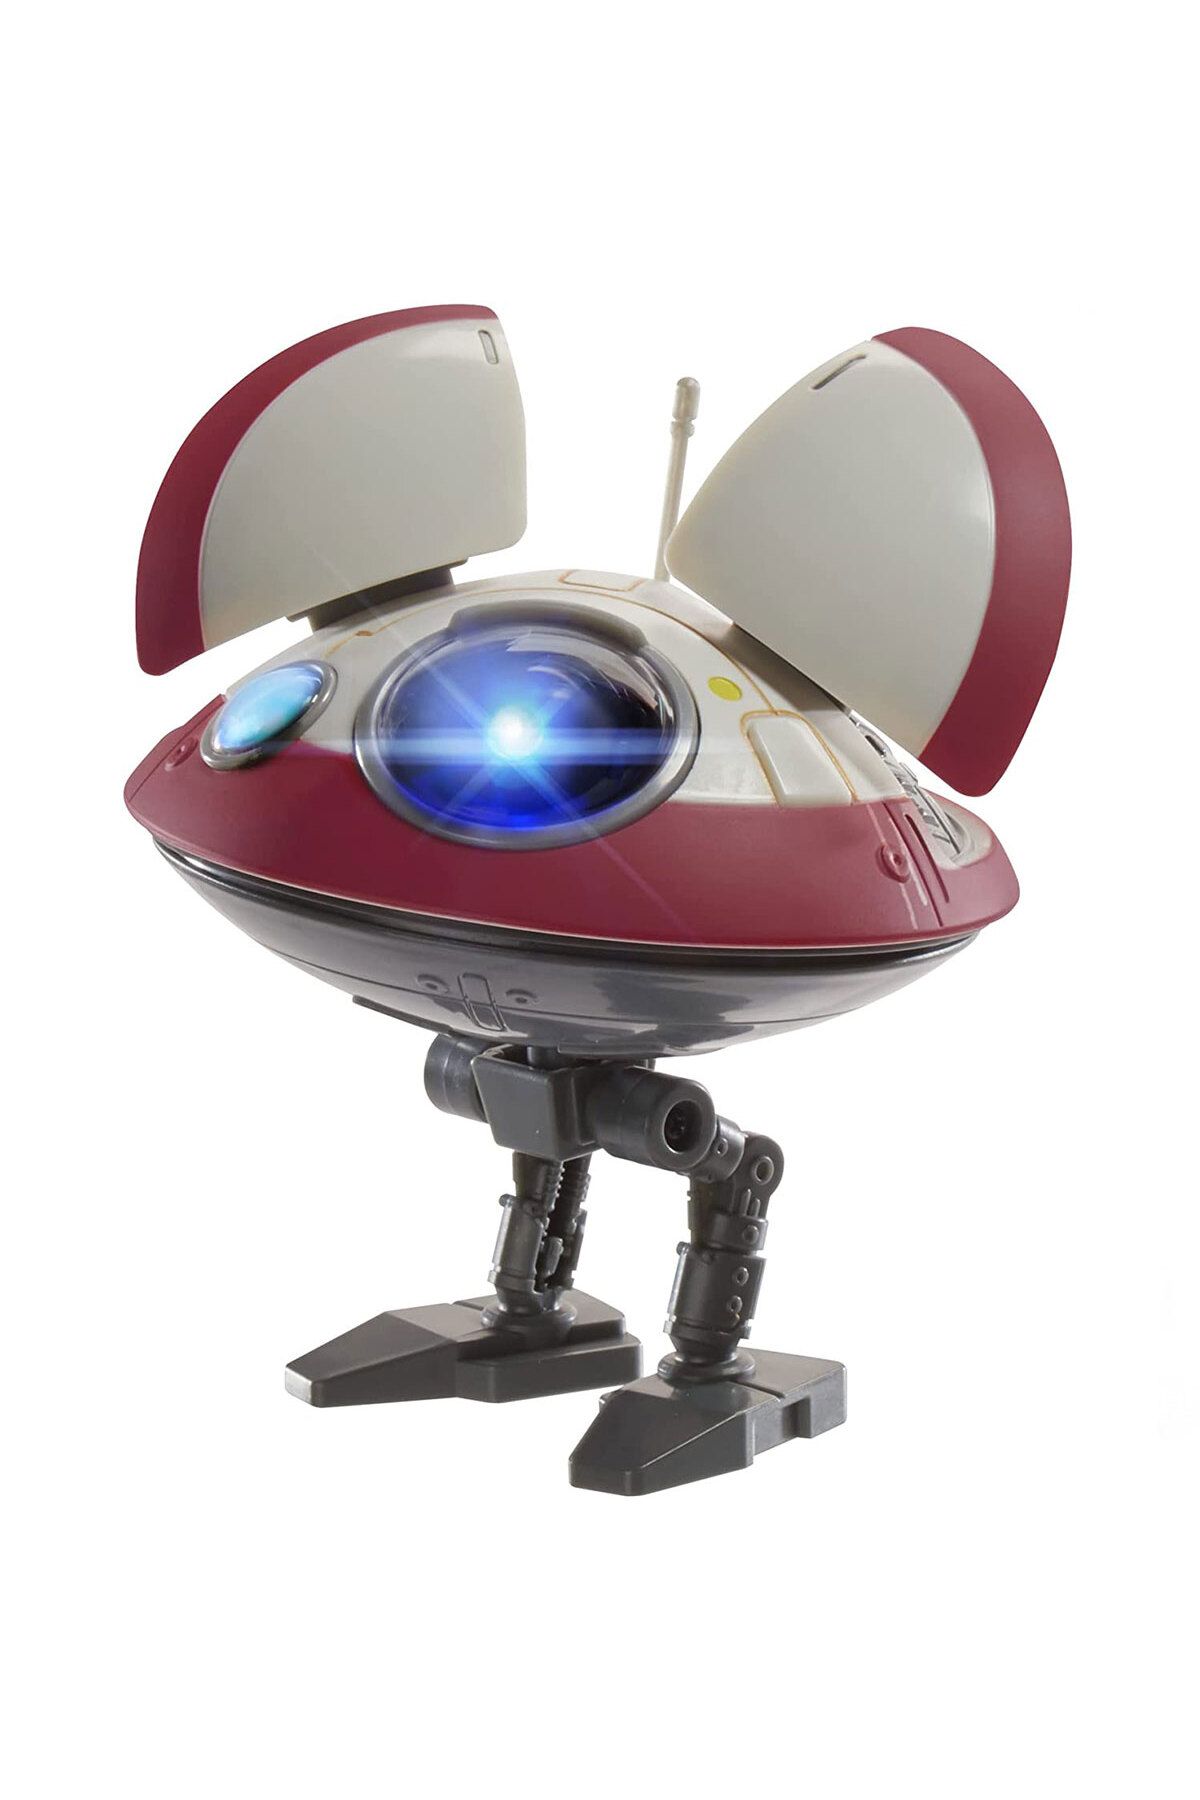 Hasbro Nessiworld Star Wars LO-LA59 Lola Sevimli Droid Robot